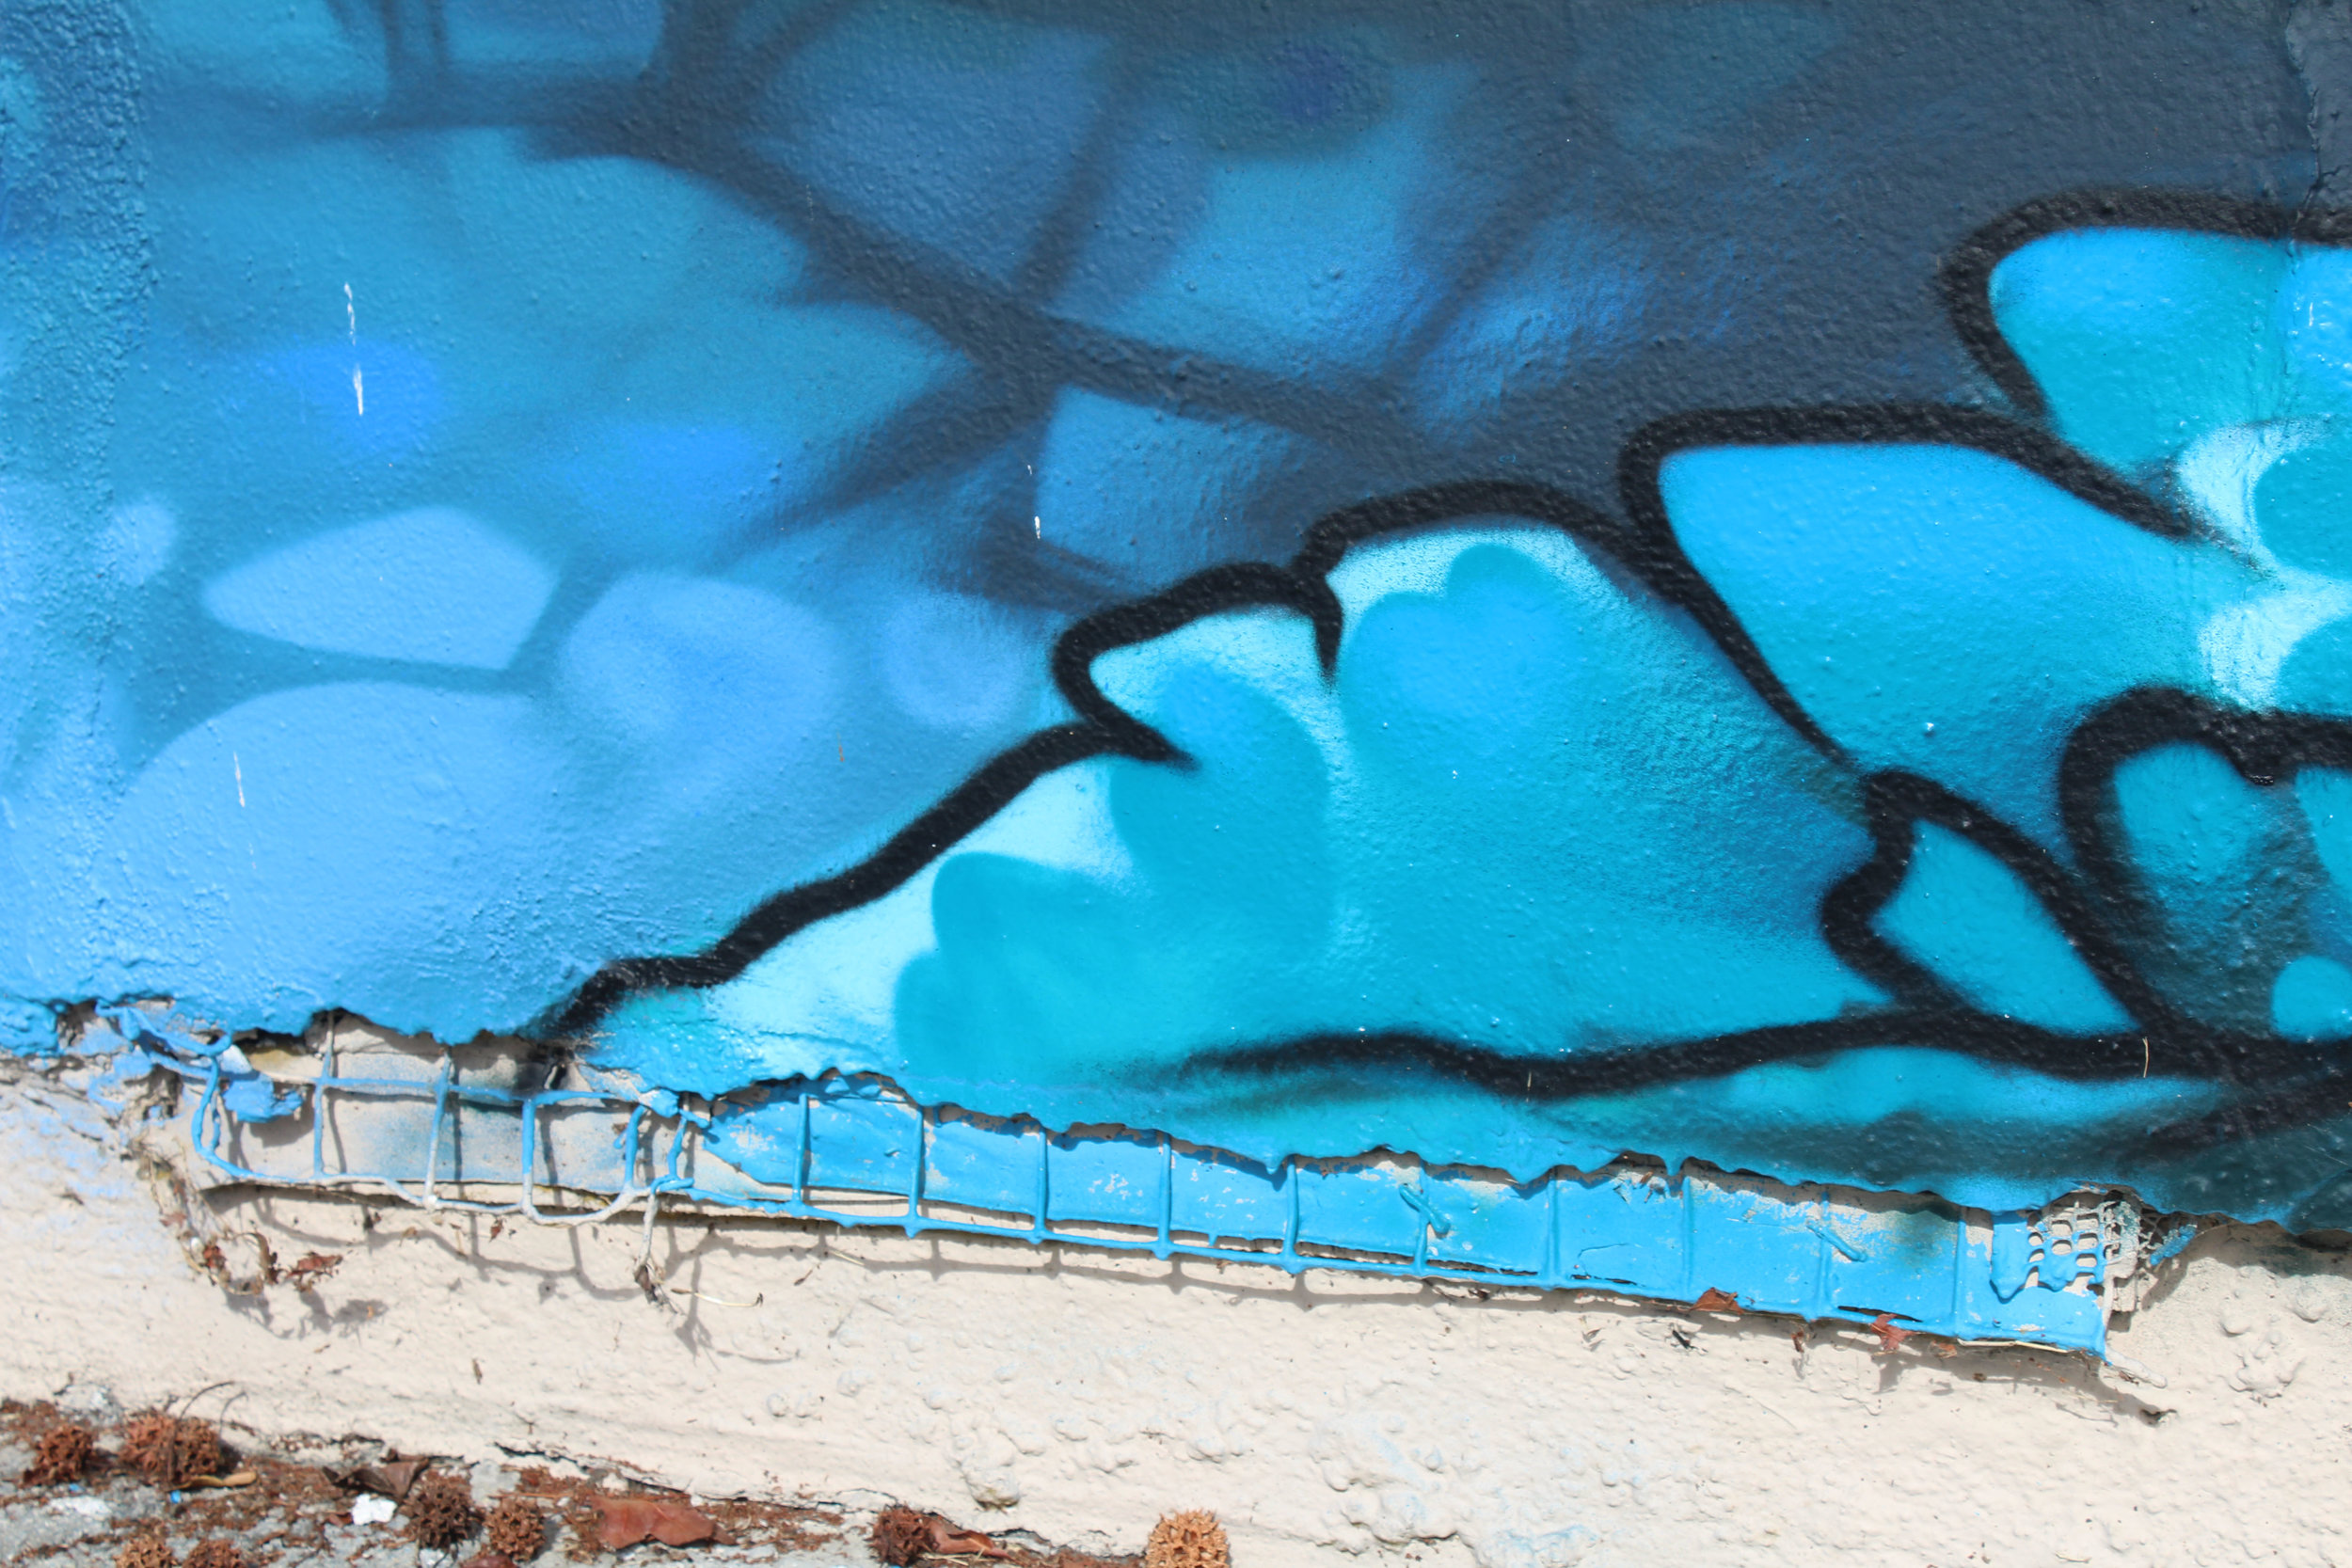  Murals that show slight damage located on Pico Blvd in Santa Monica, Calif. 